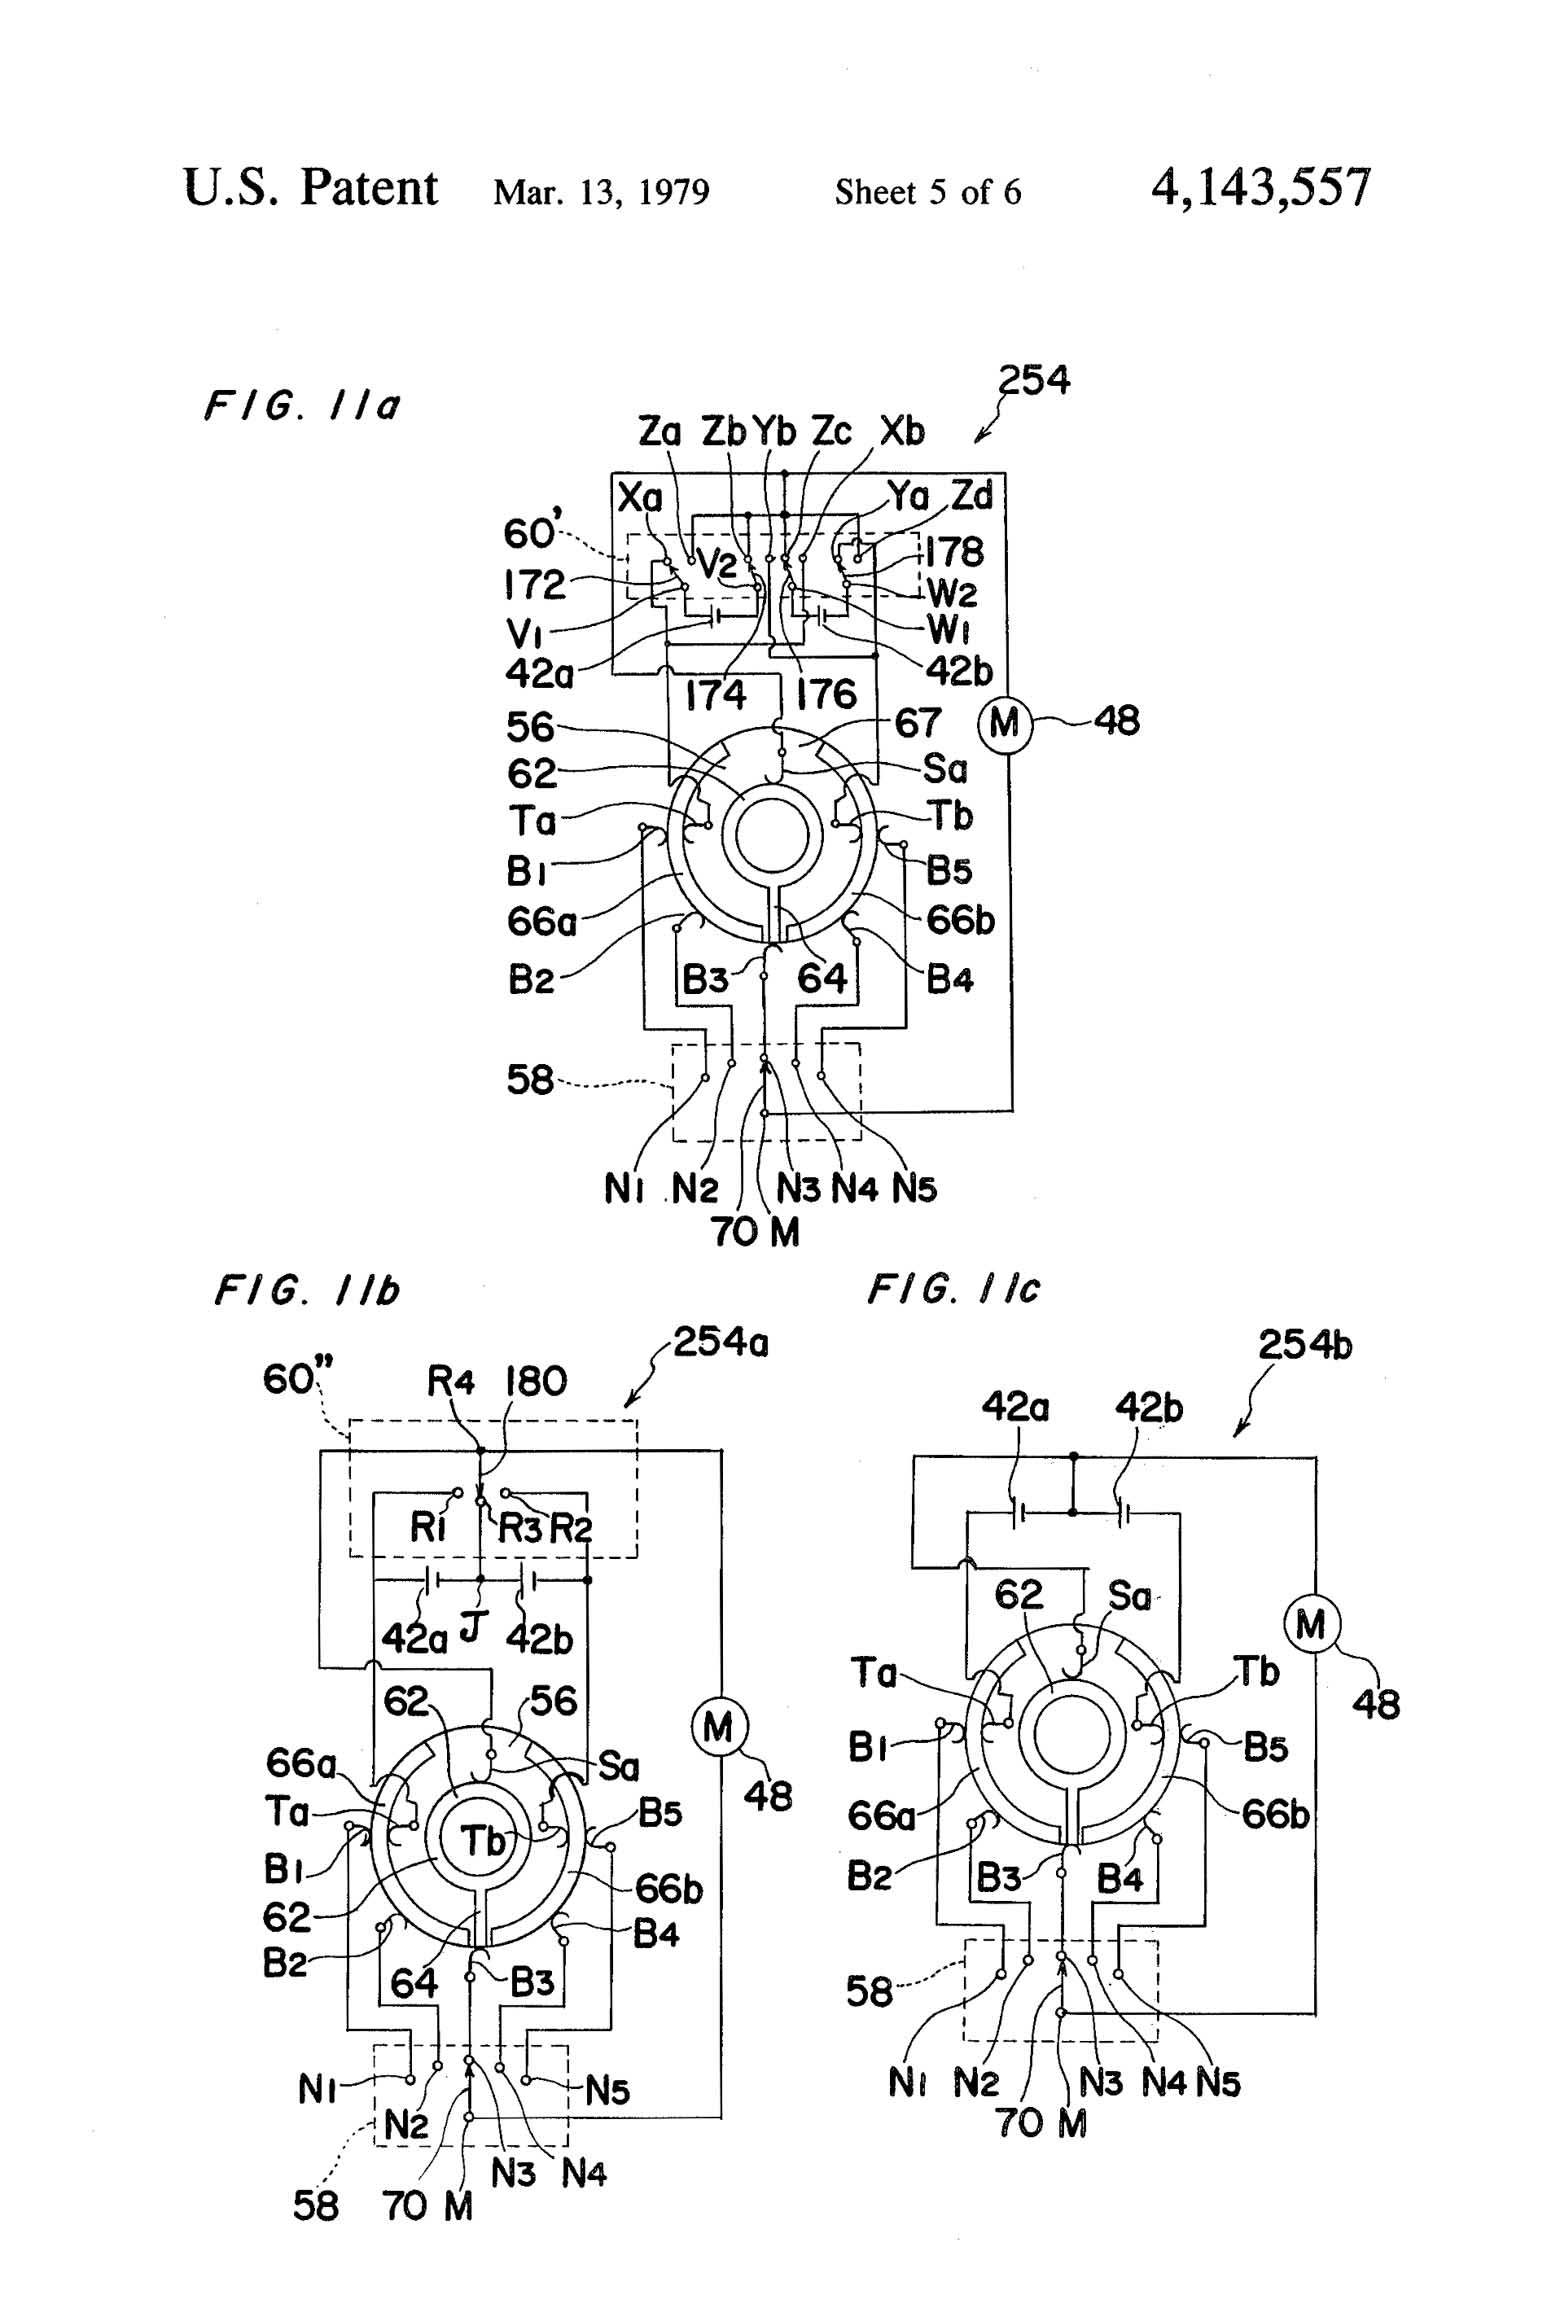 US Patent 4,143,557 - Sanyo scan 17 main image